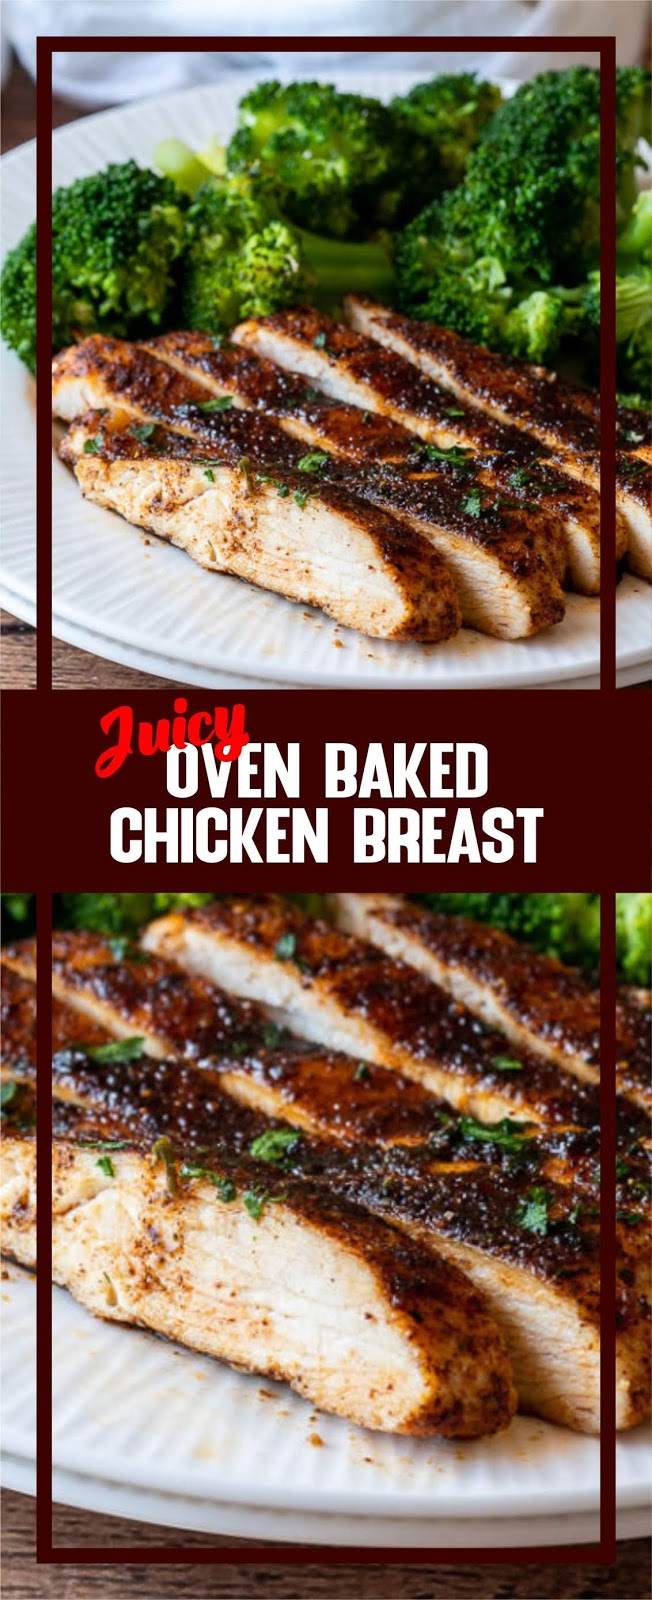 Juicy Oven Baked Chicken Breast Recipe | gloriarecipes